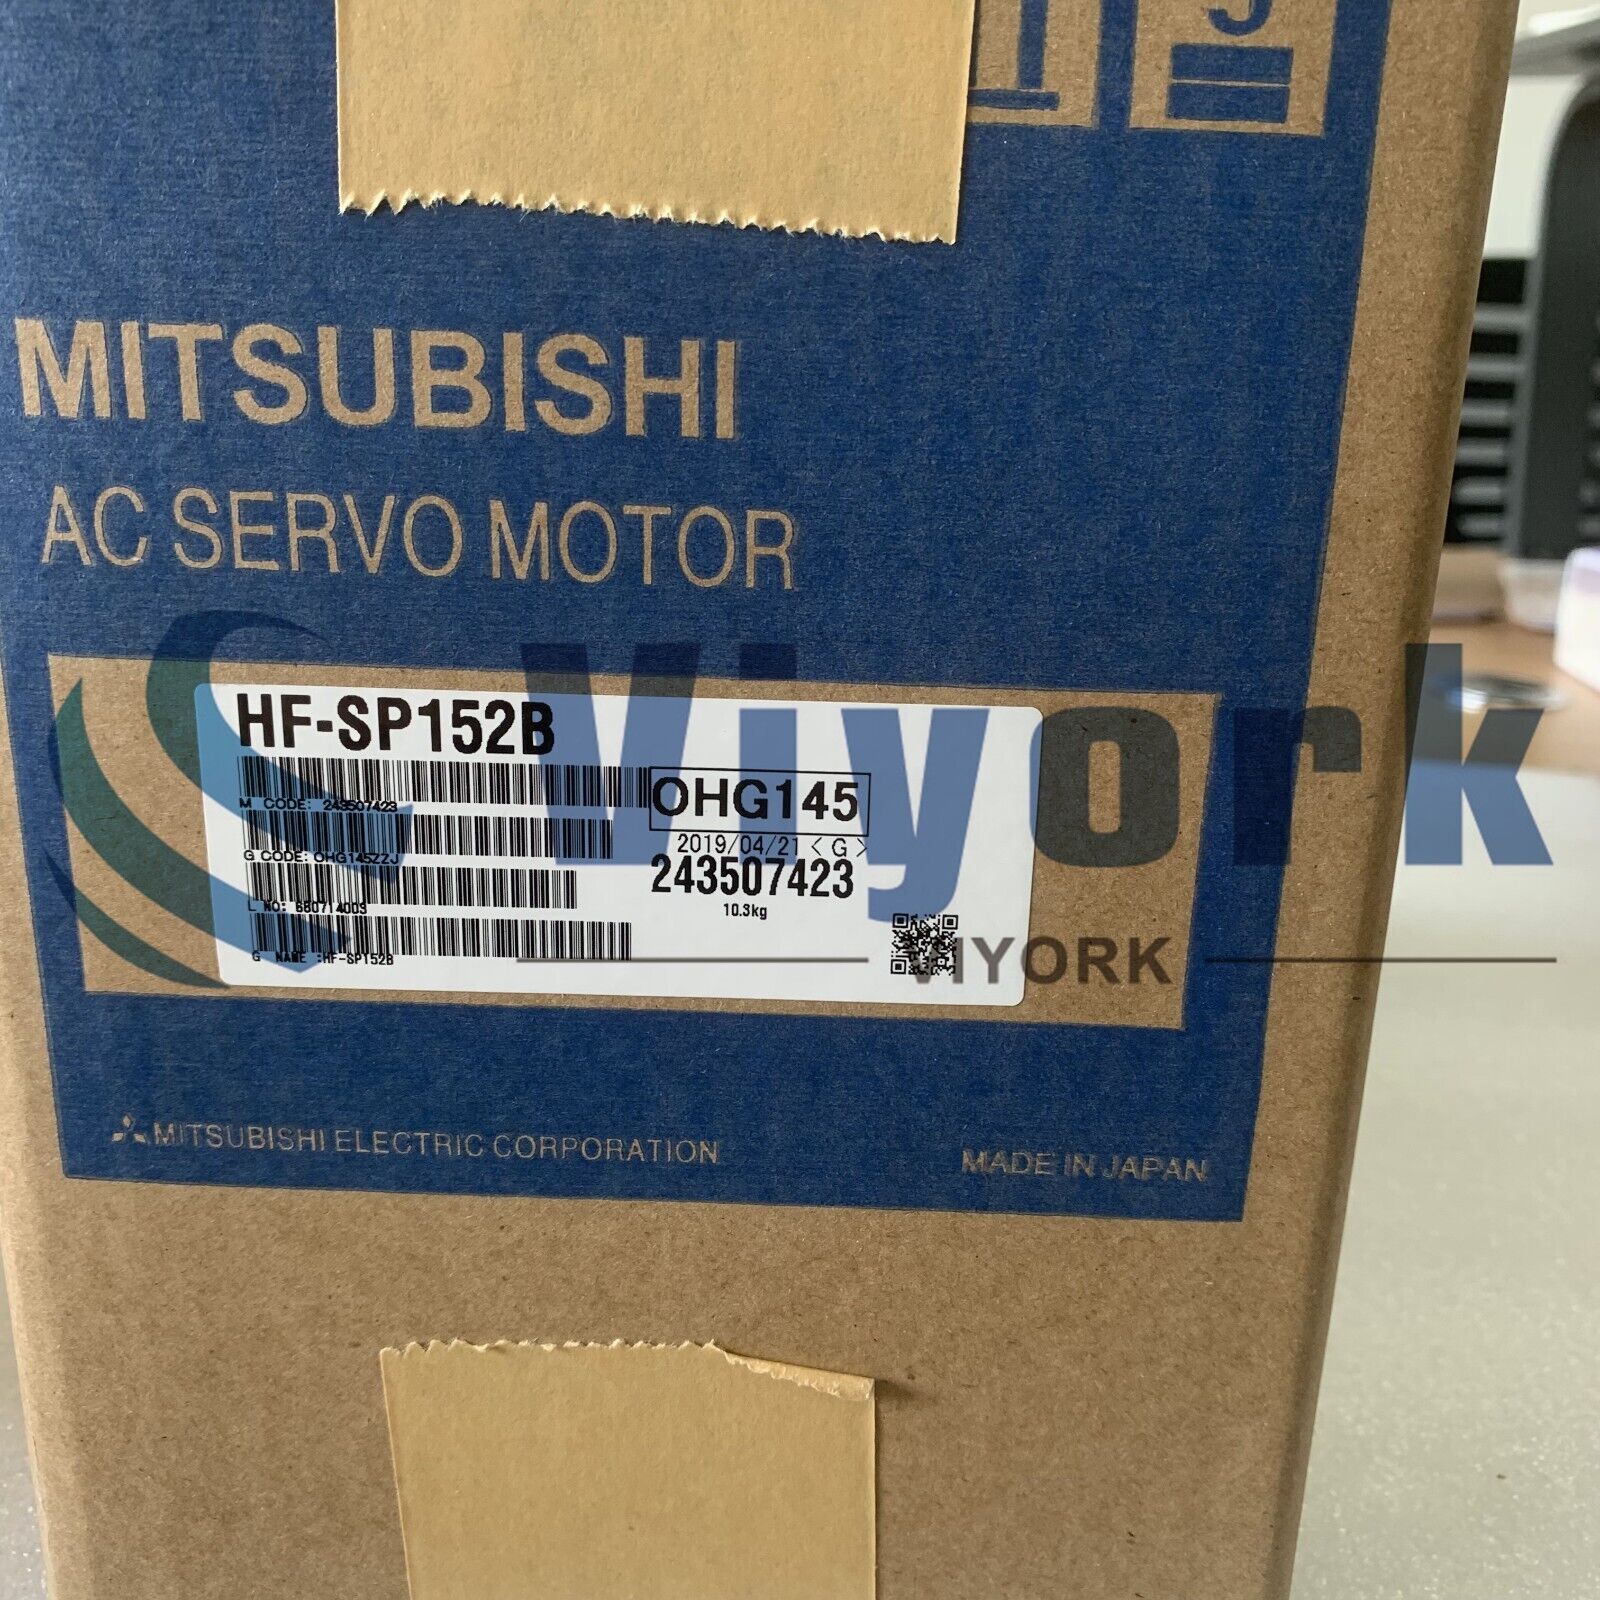 Mitsubishi AC Servo Motor HF-SP152B